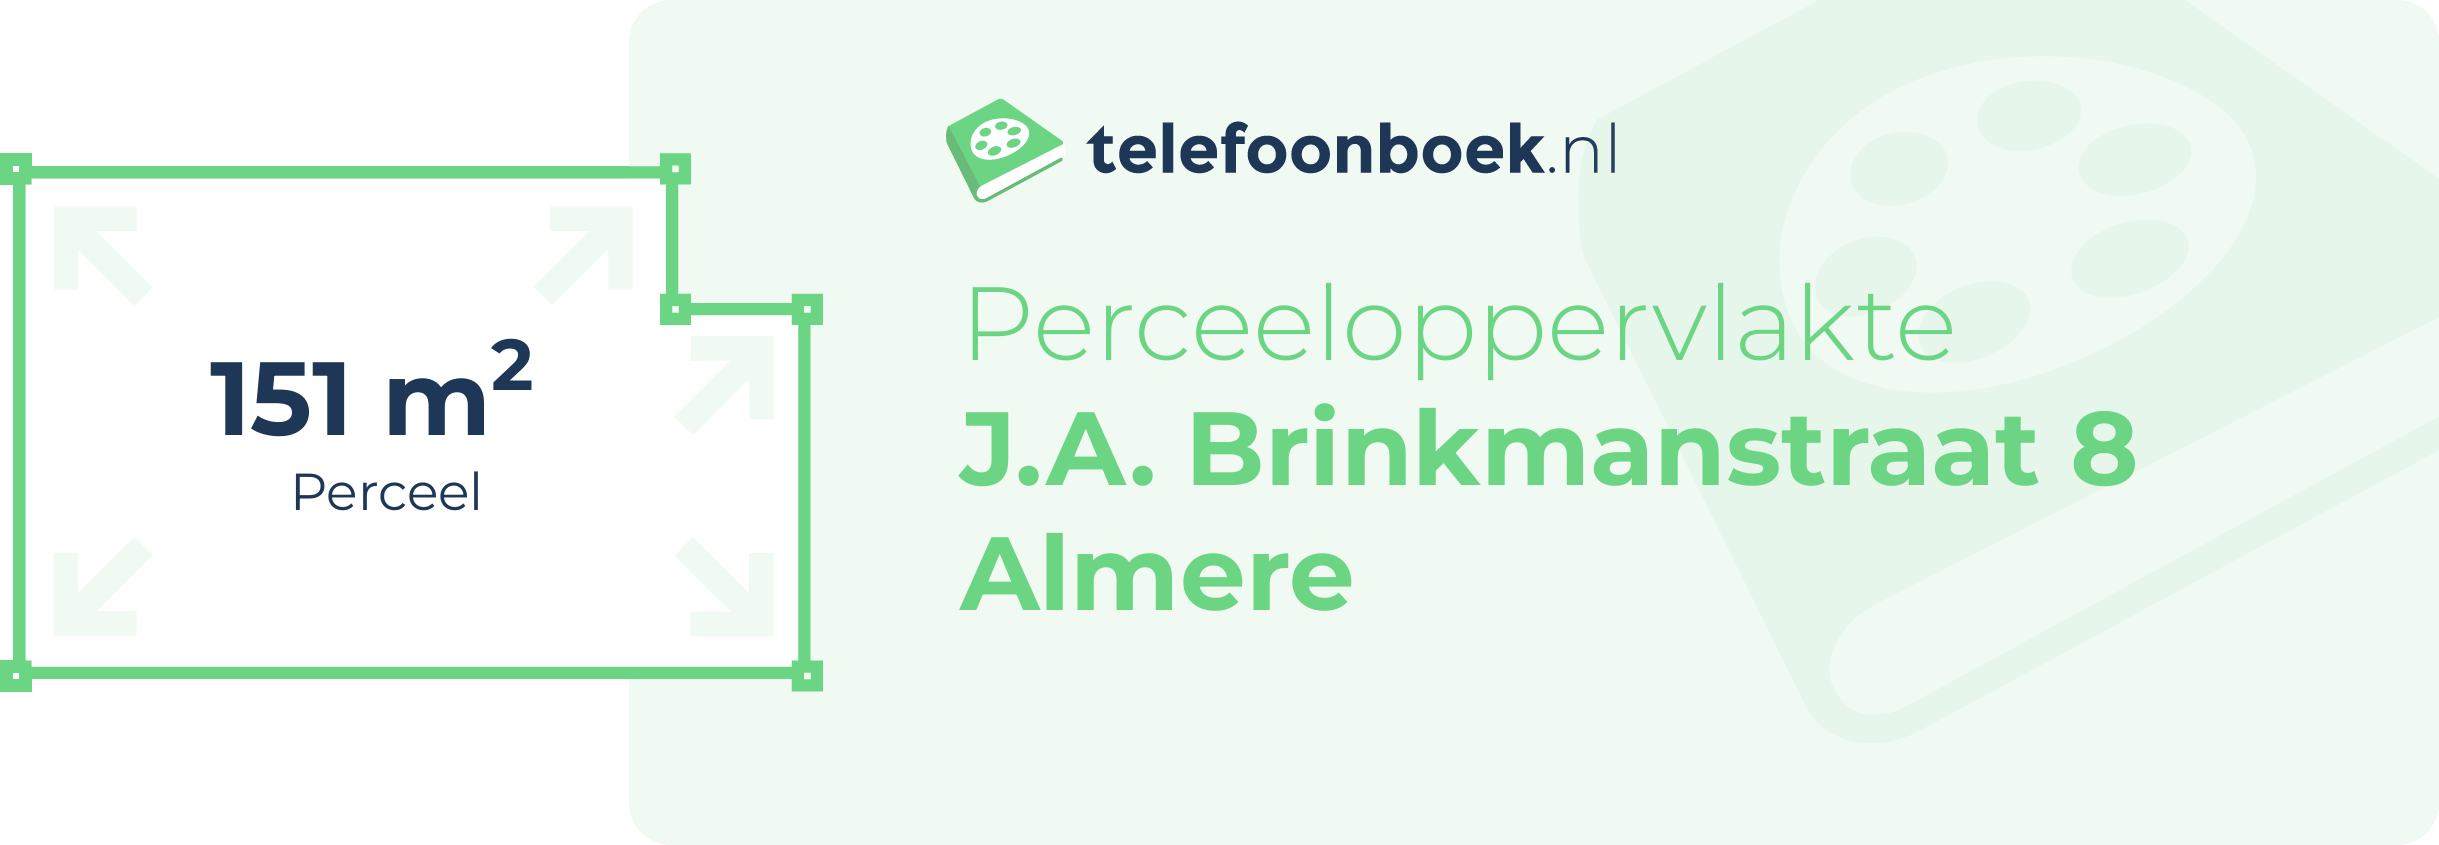 Perceeloppervlakte J.A. Brinkmanstraat 8 Almere